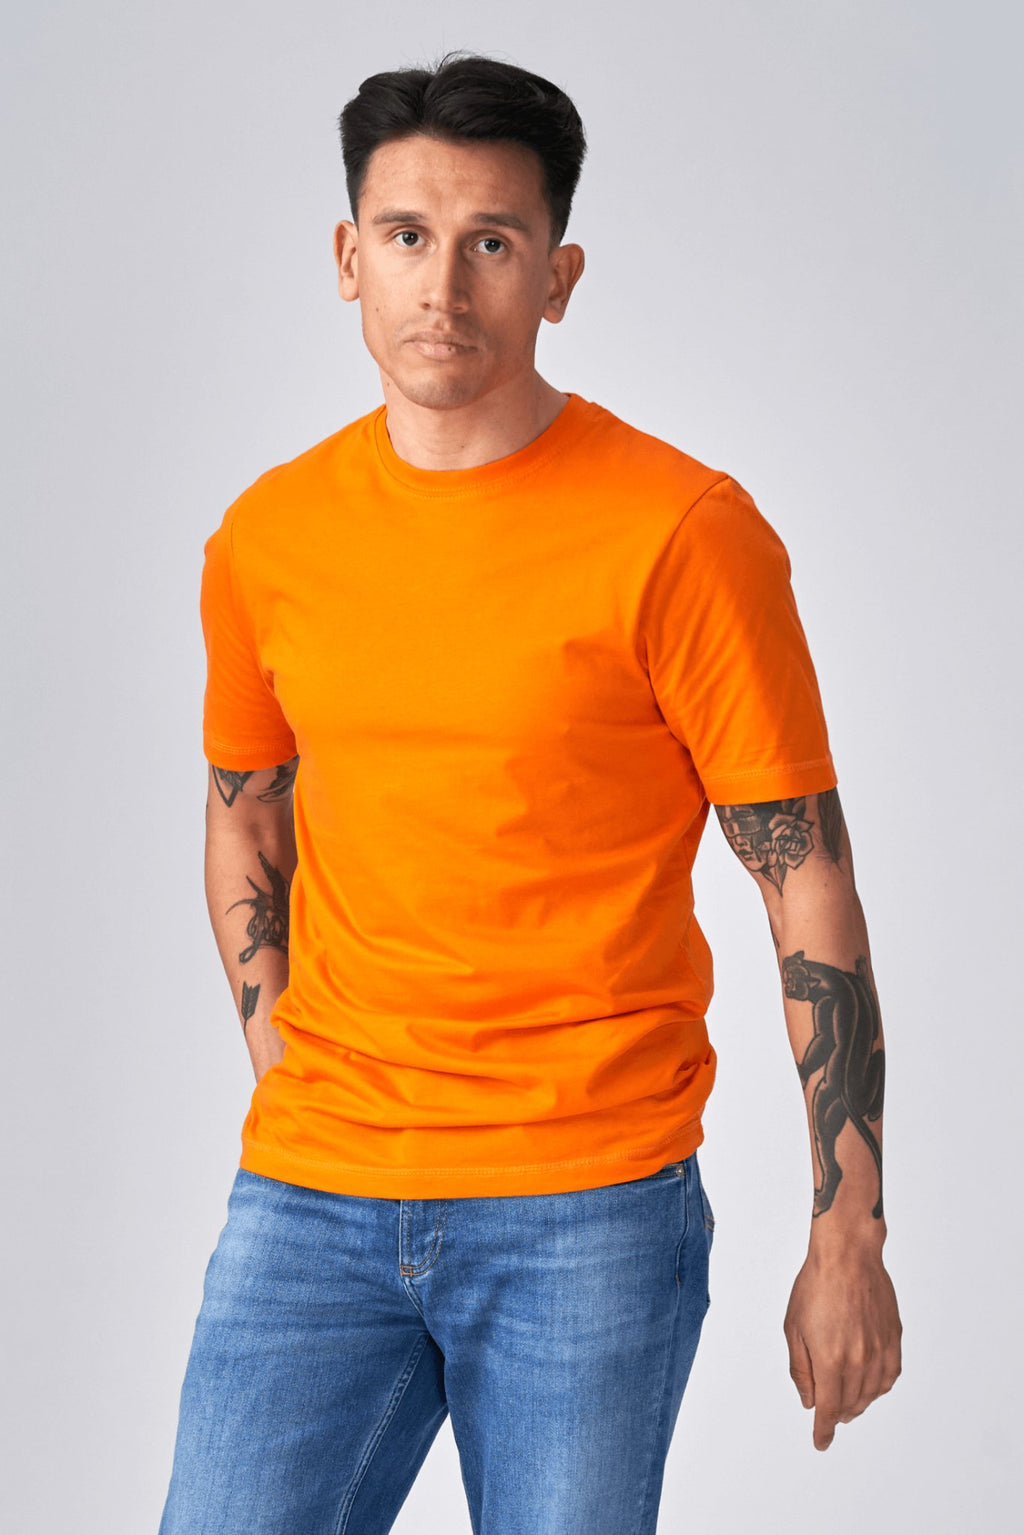 Biologisch Basic T -shirt - oranje